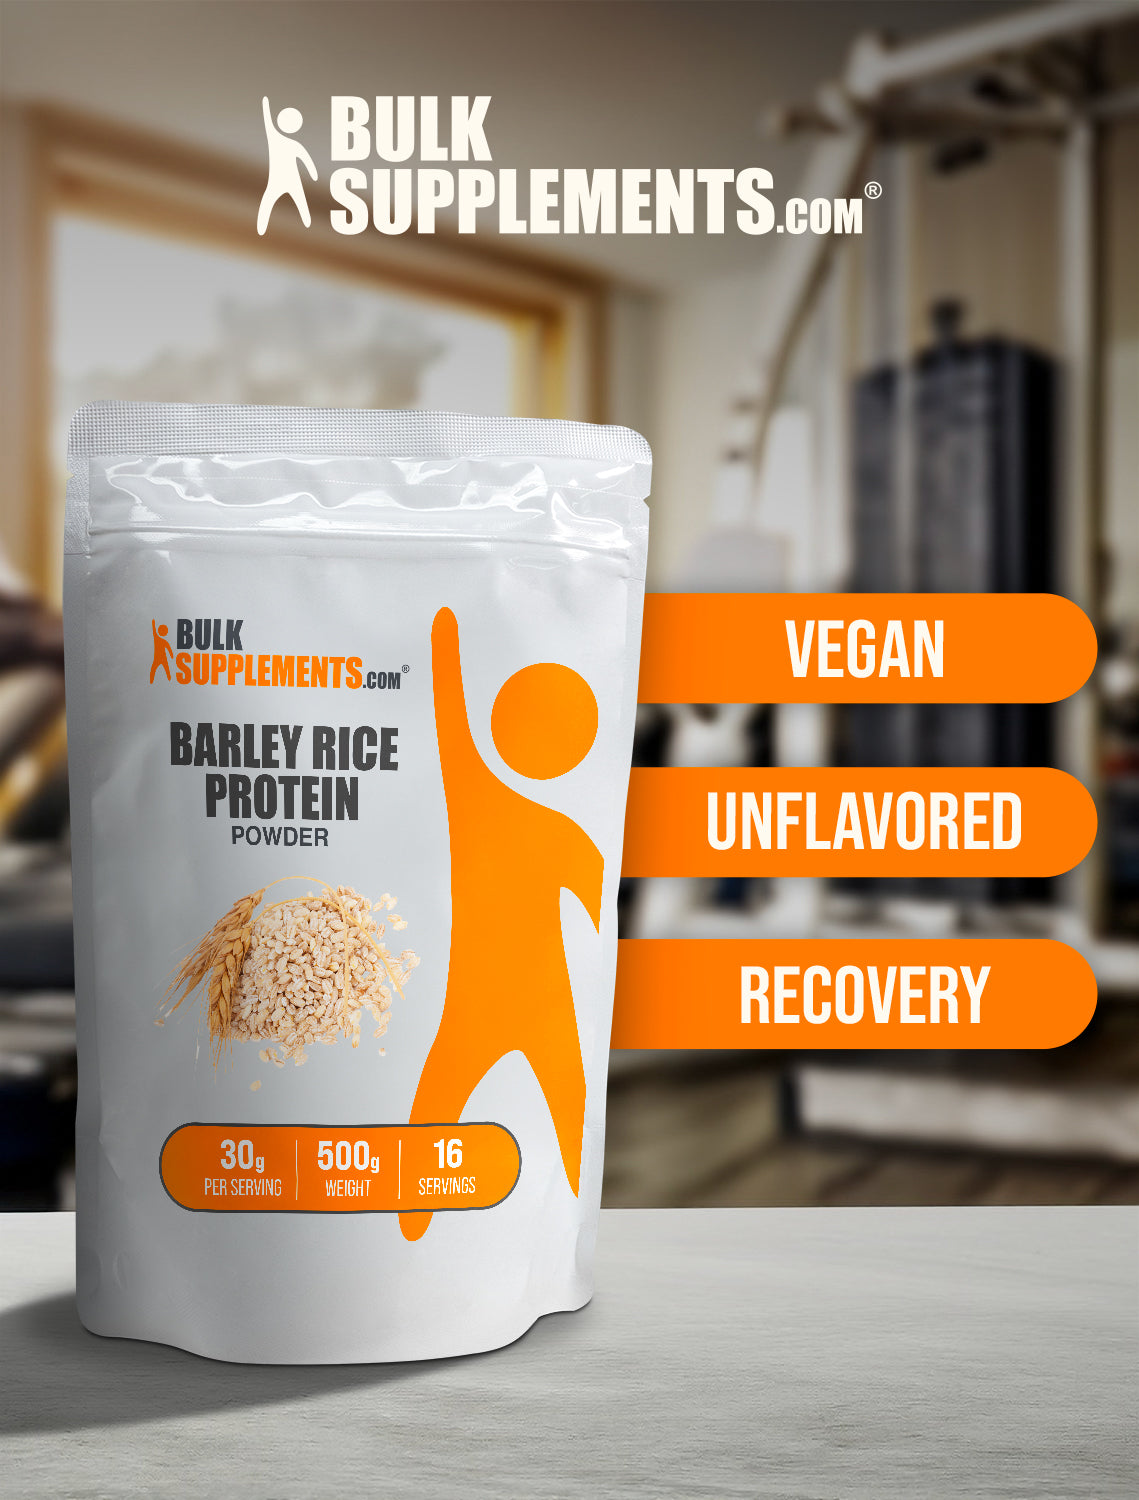 Barley rice protein powder 500g keywords image